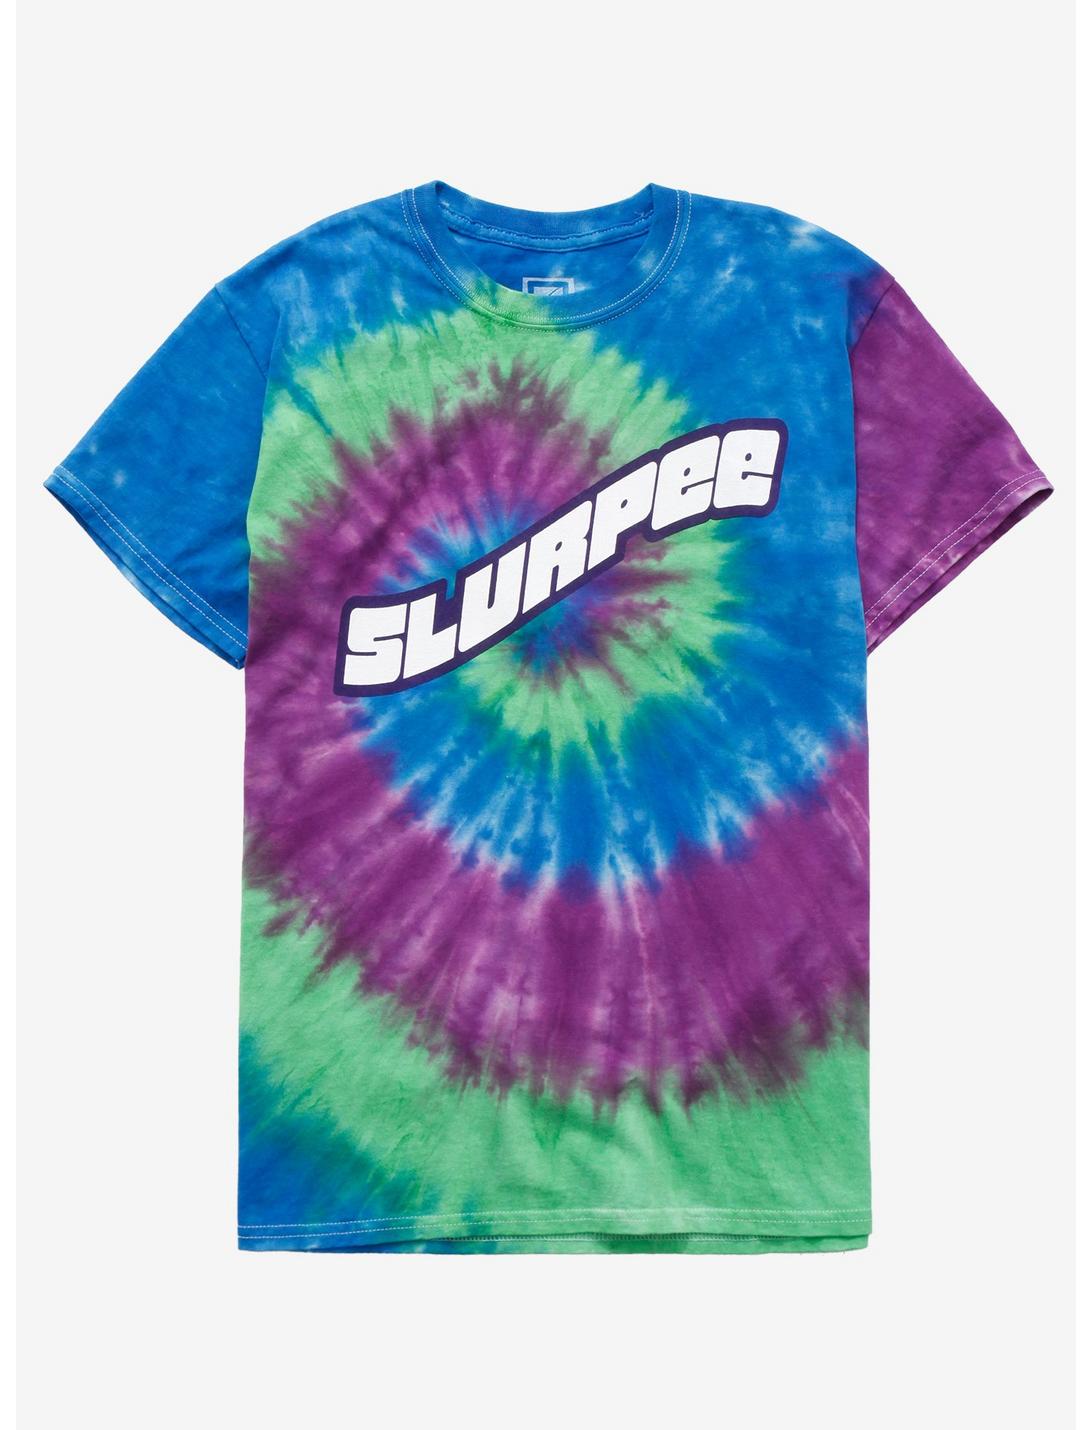 7-Eleven Slurpee Tie-Dye T-Shirt, MULTI, hi-res